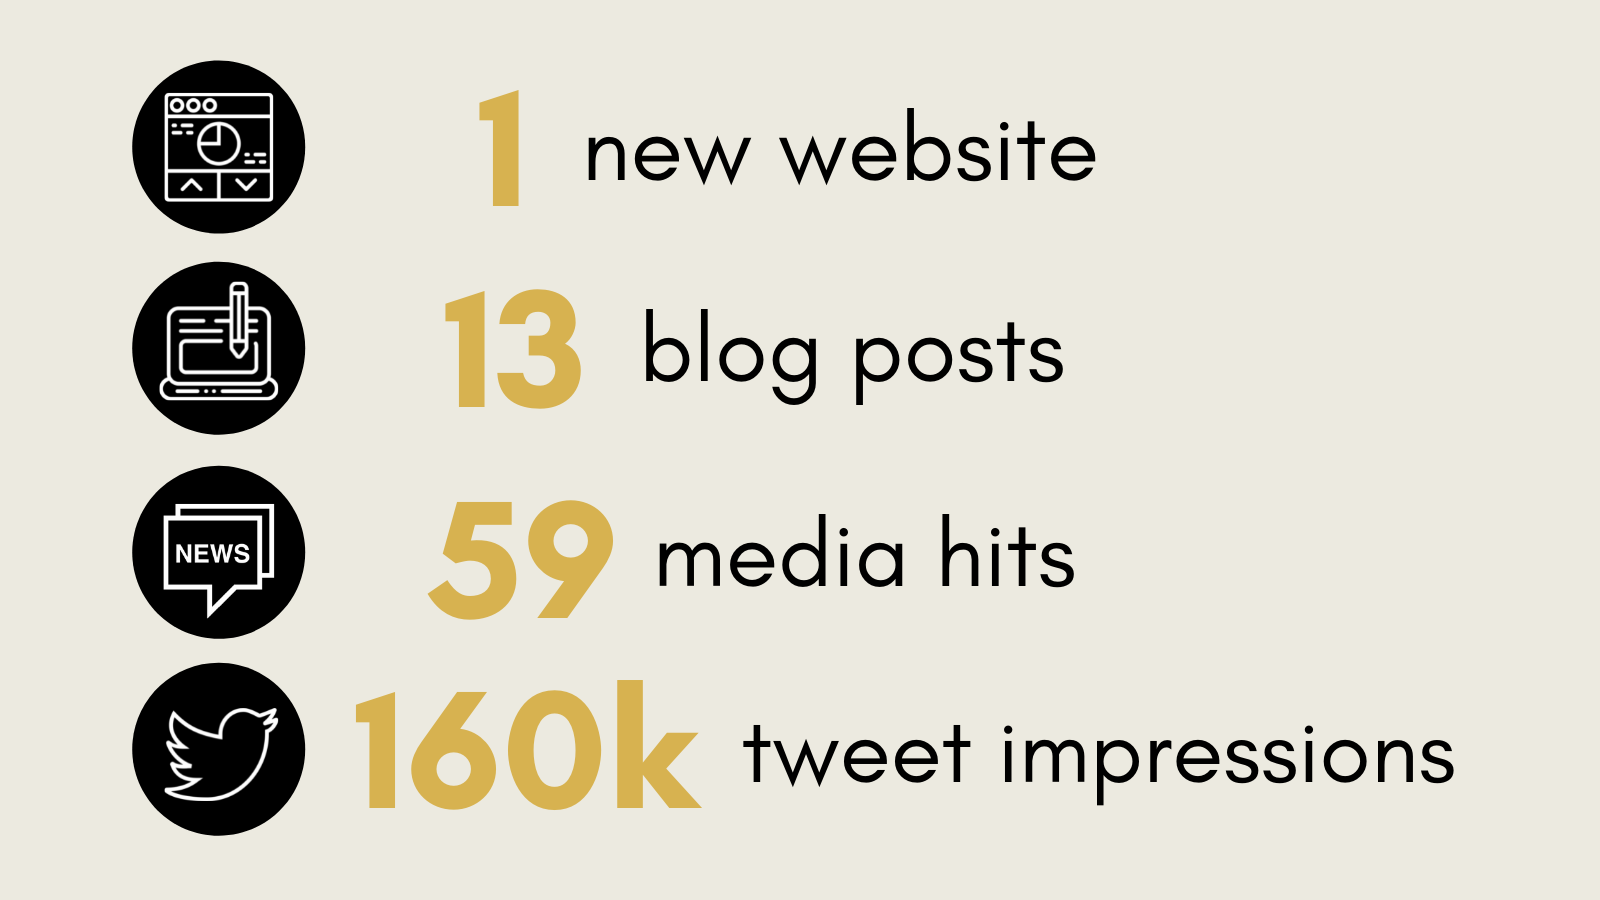 infographic of statistics: 1 new website, 13 blog posts, 59 media hits, 160k tweet impressions